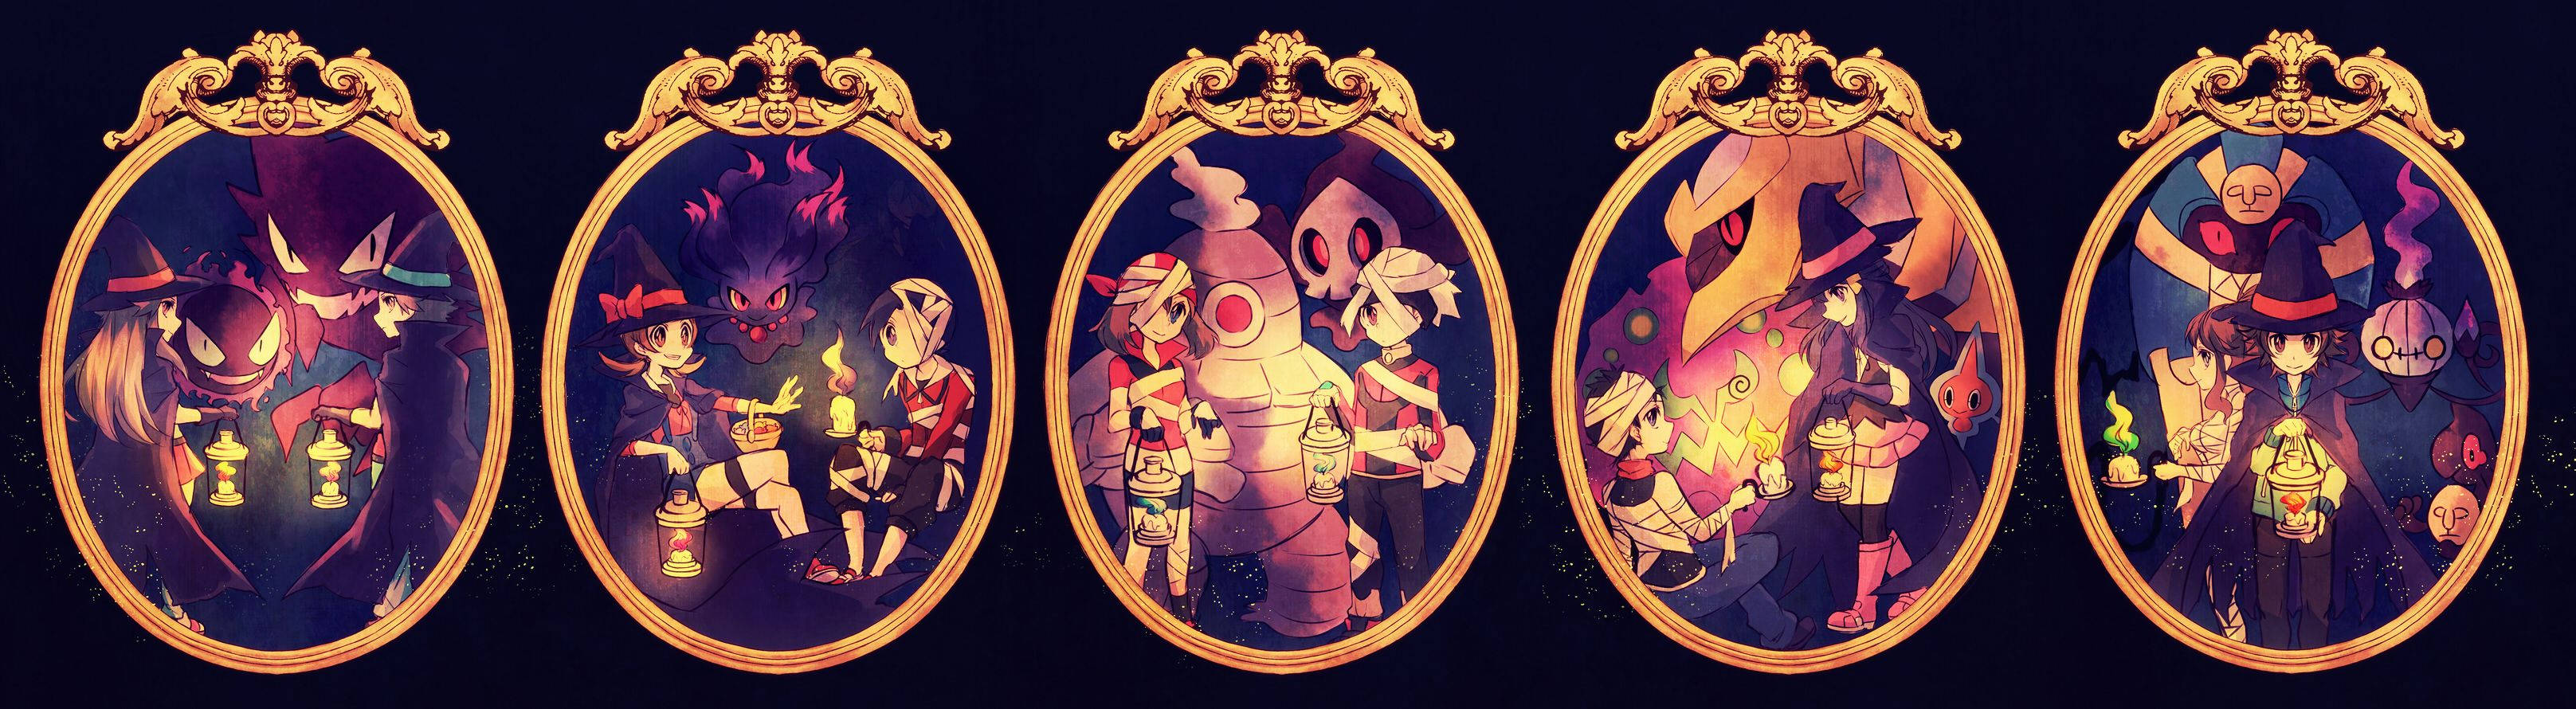 Pokémon Frames With Dusclops Wallpaper